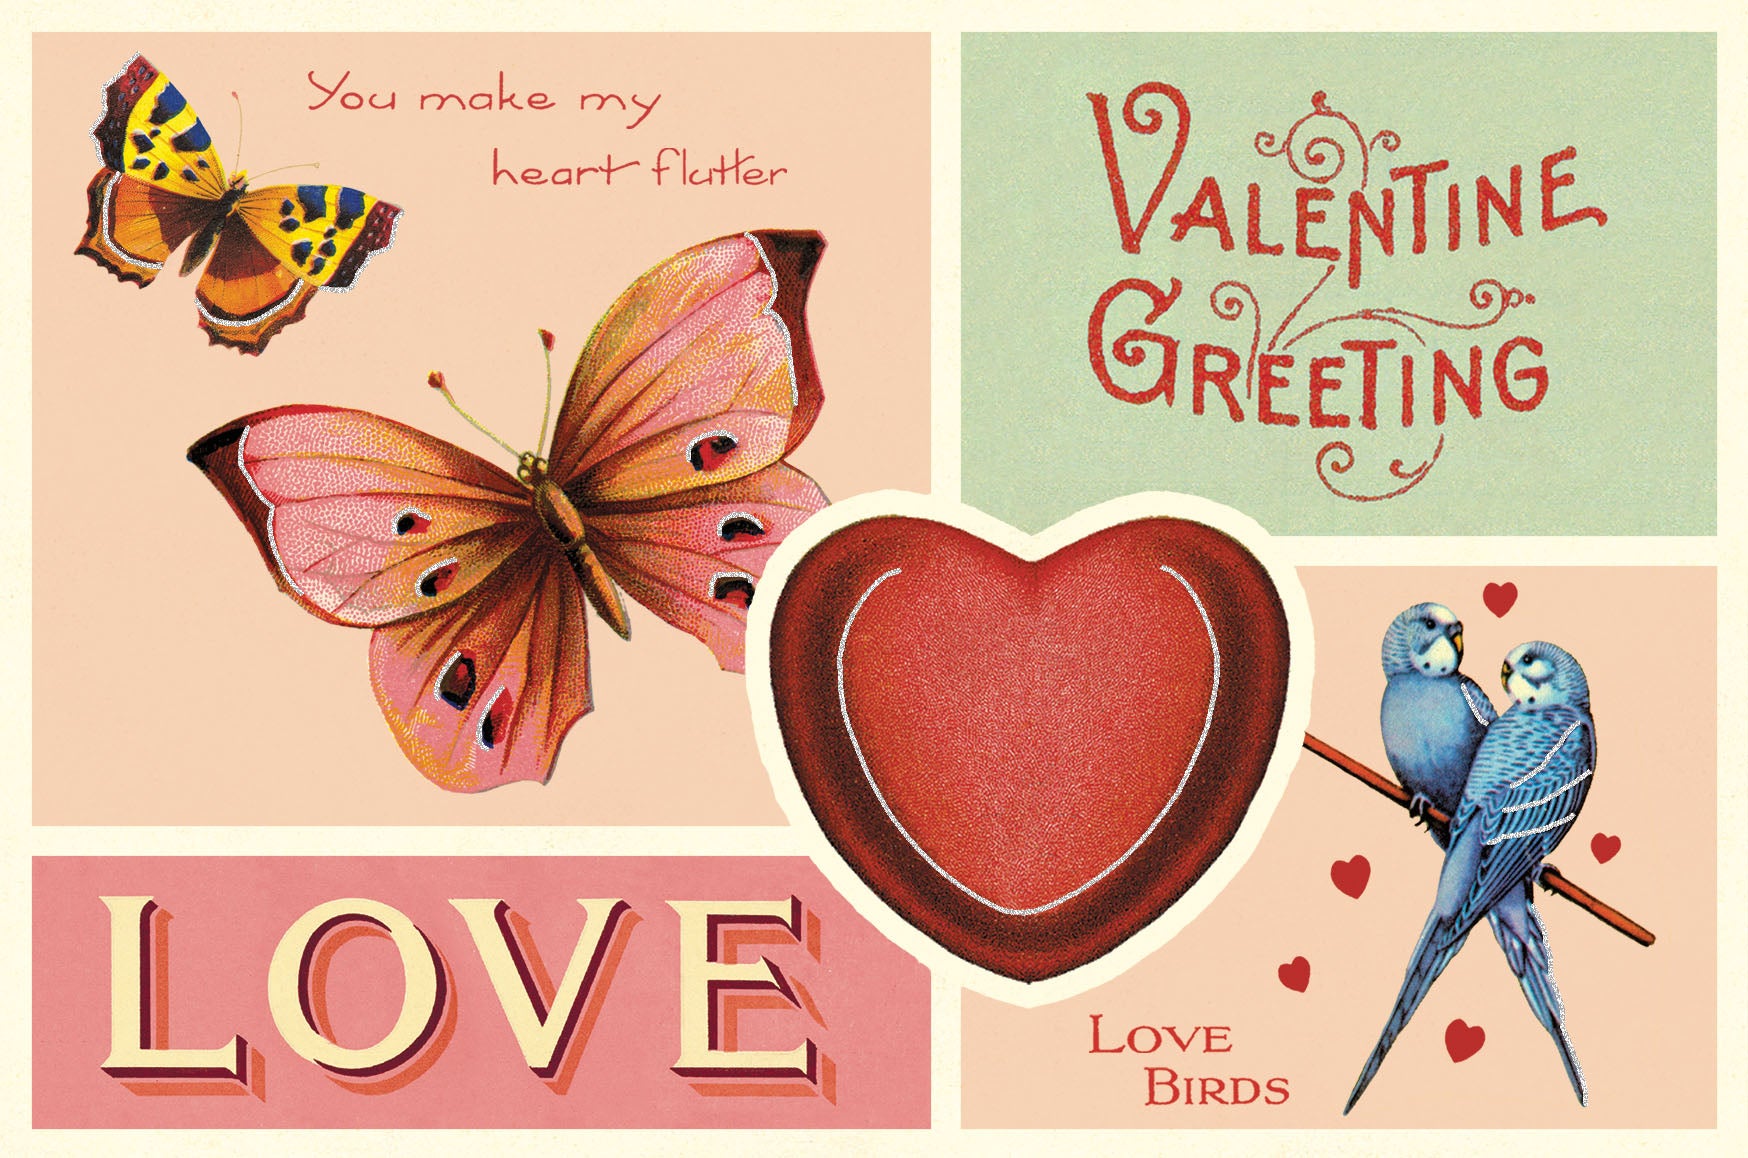 Cavallini & Co. Valentine Greetings Wrap | Paper Source